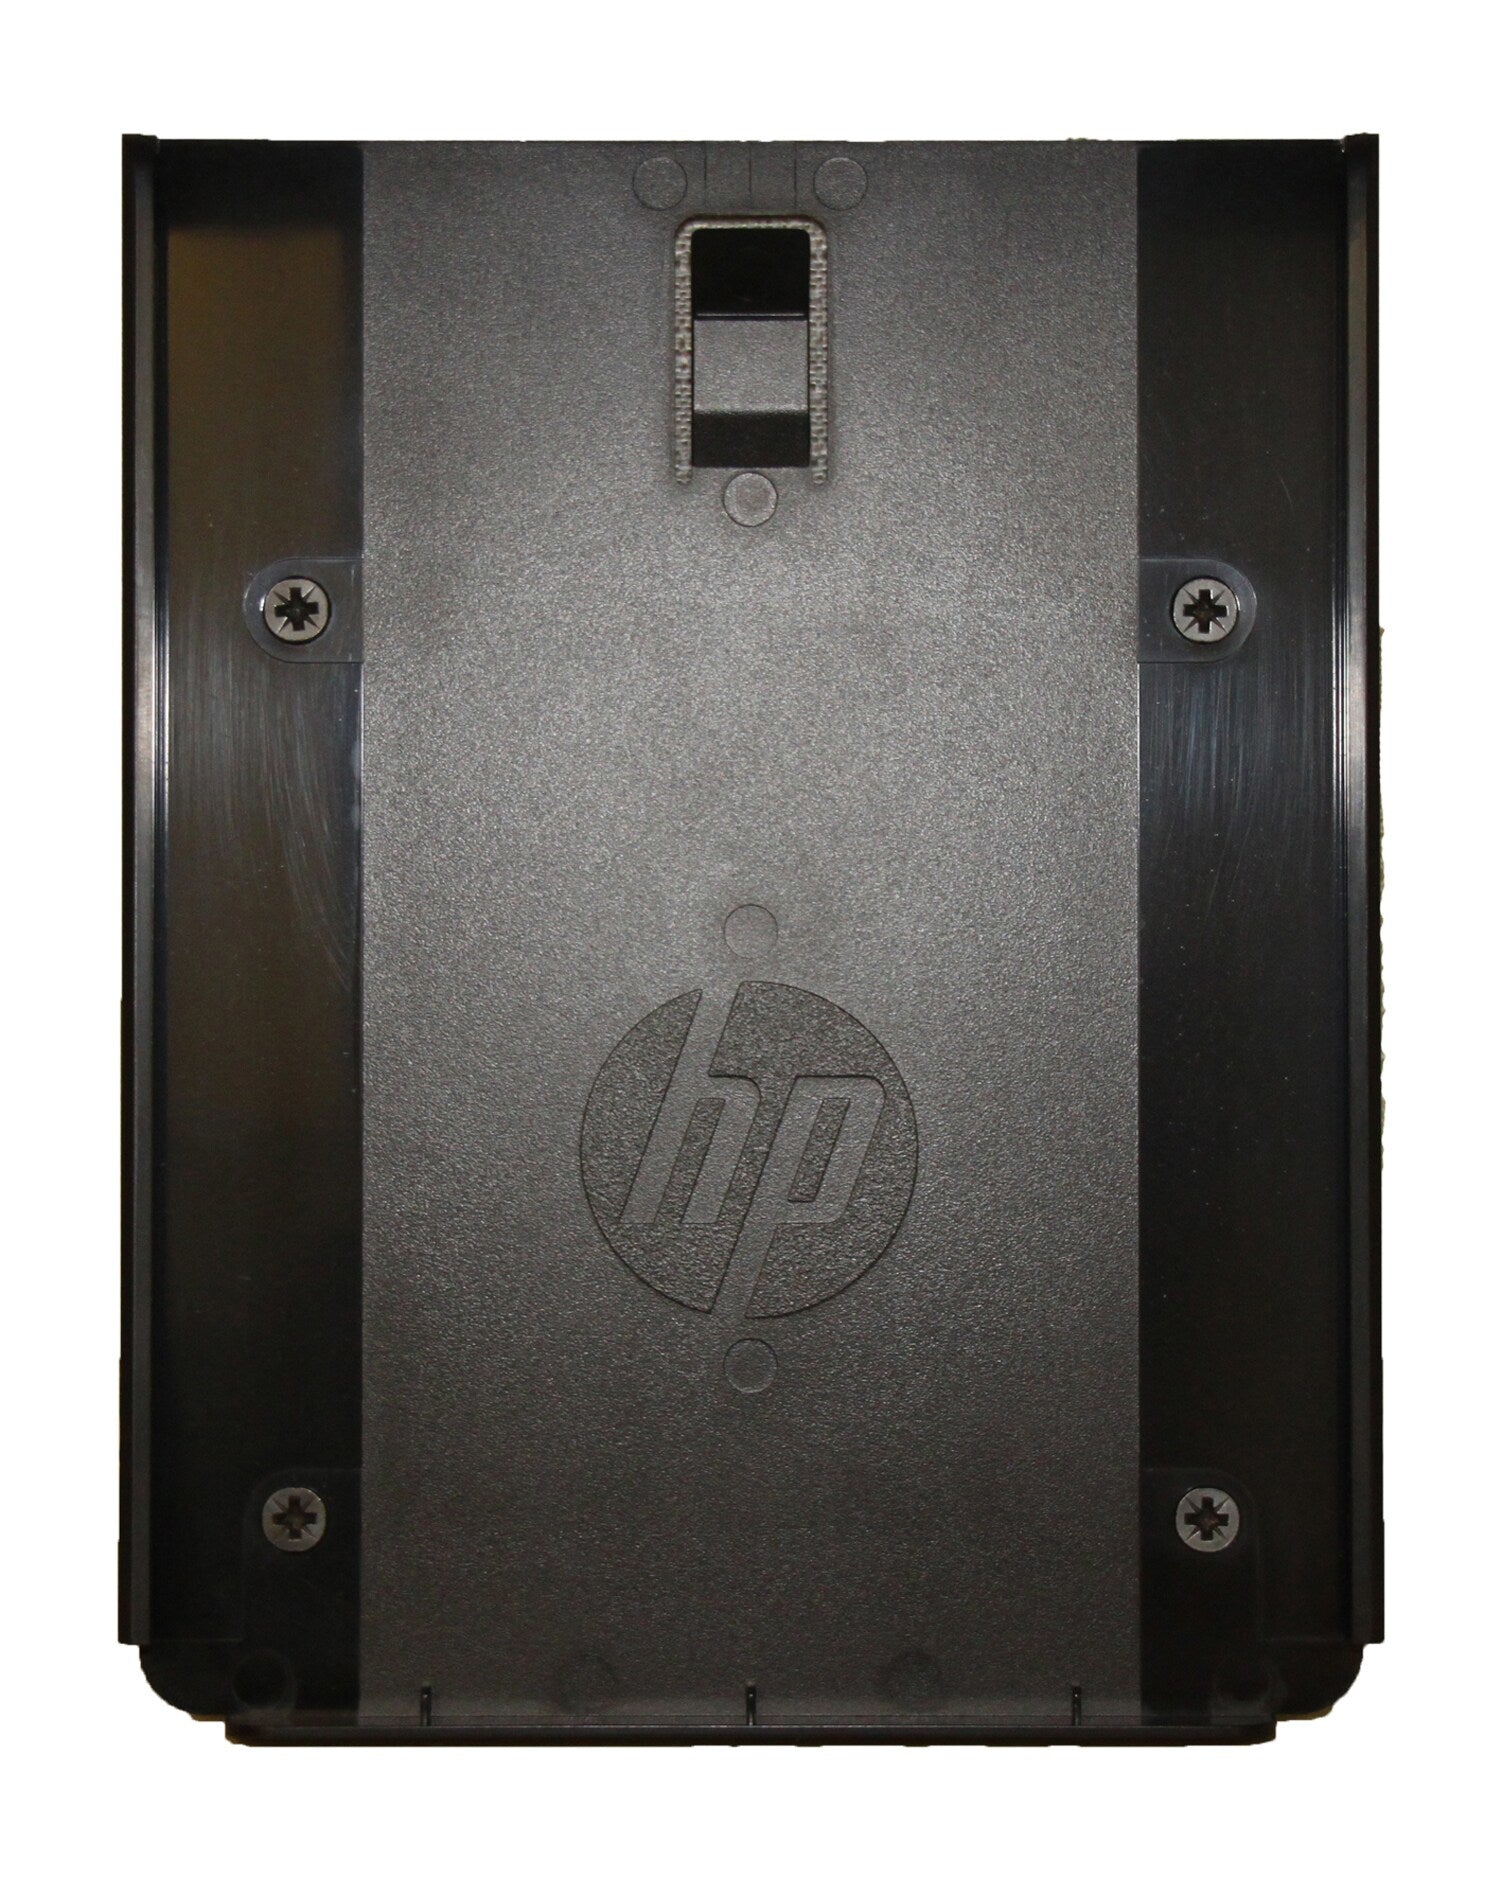 HP VESA Mount Bracket for t310 Zero Client-0